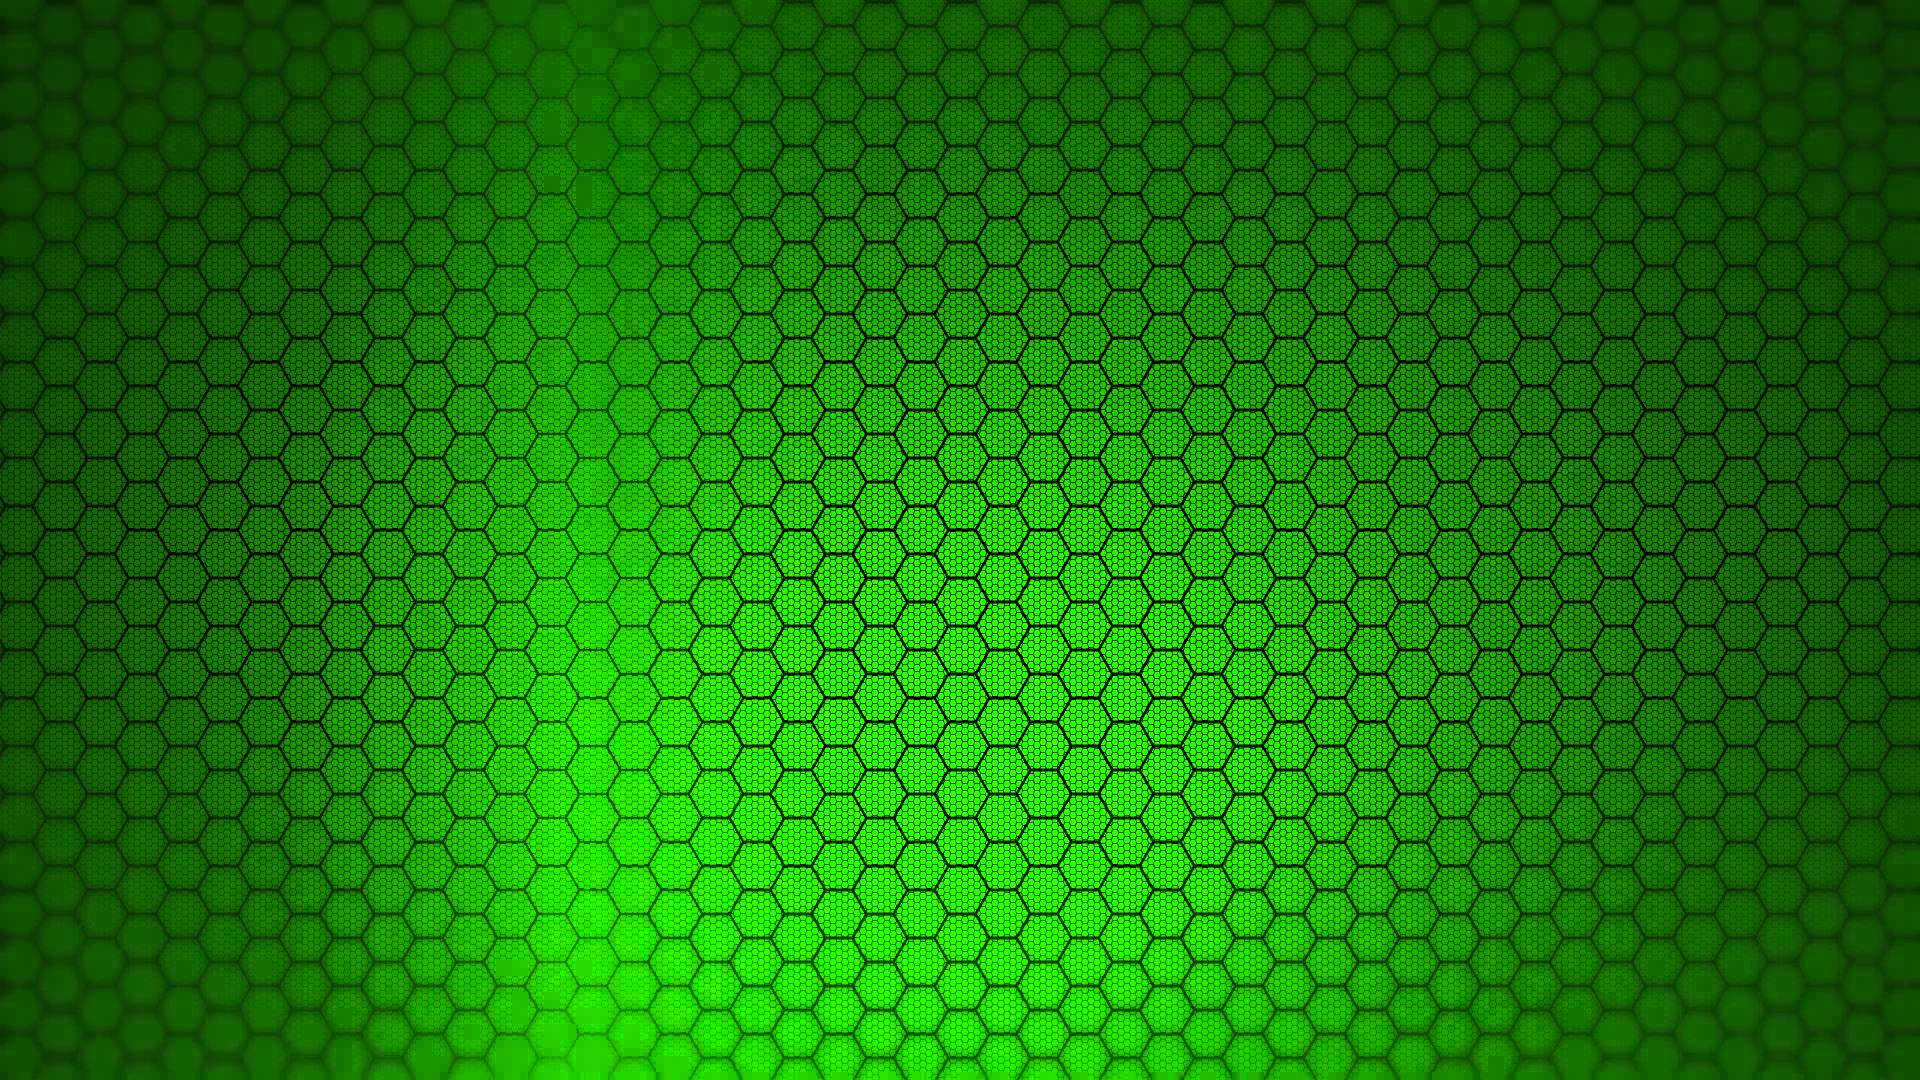 359672 Green Screen Background Images Stock Photos  Vectors   Shutterstock